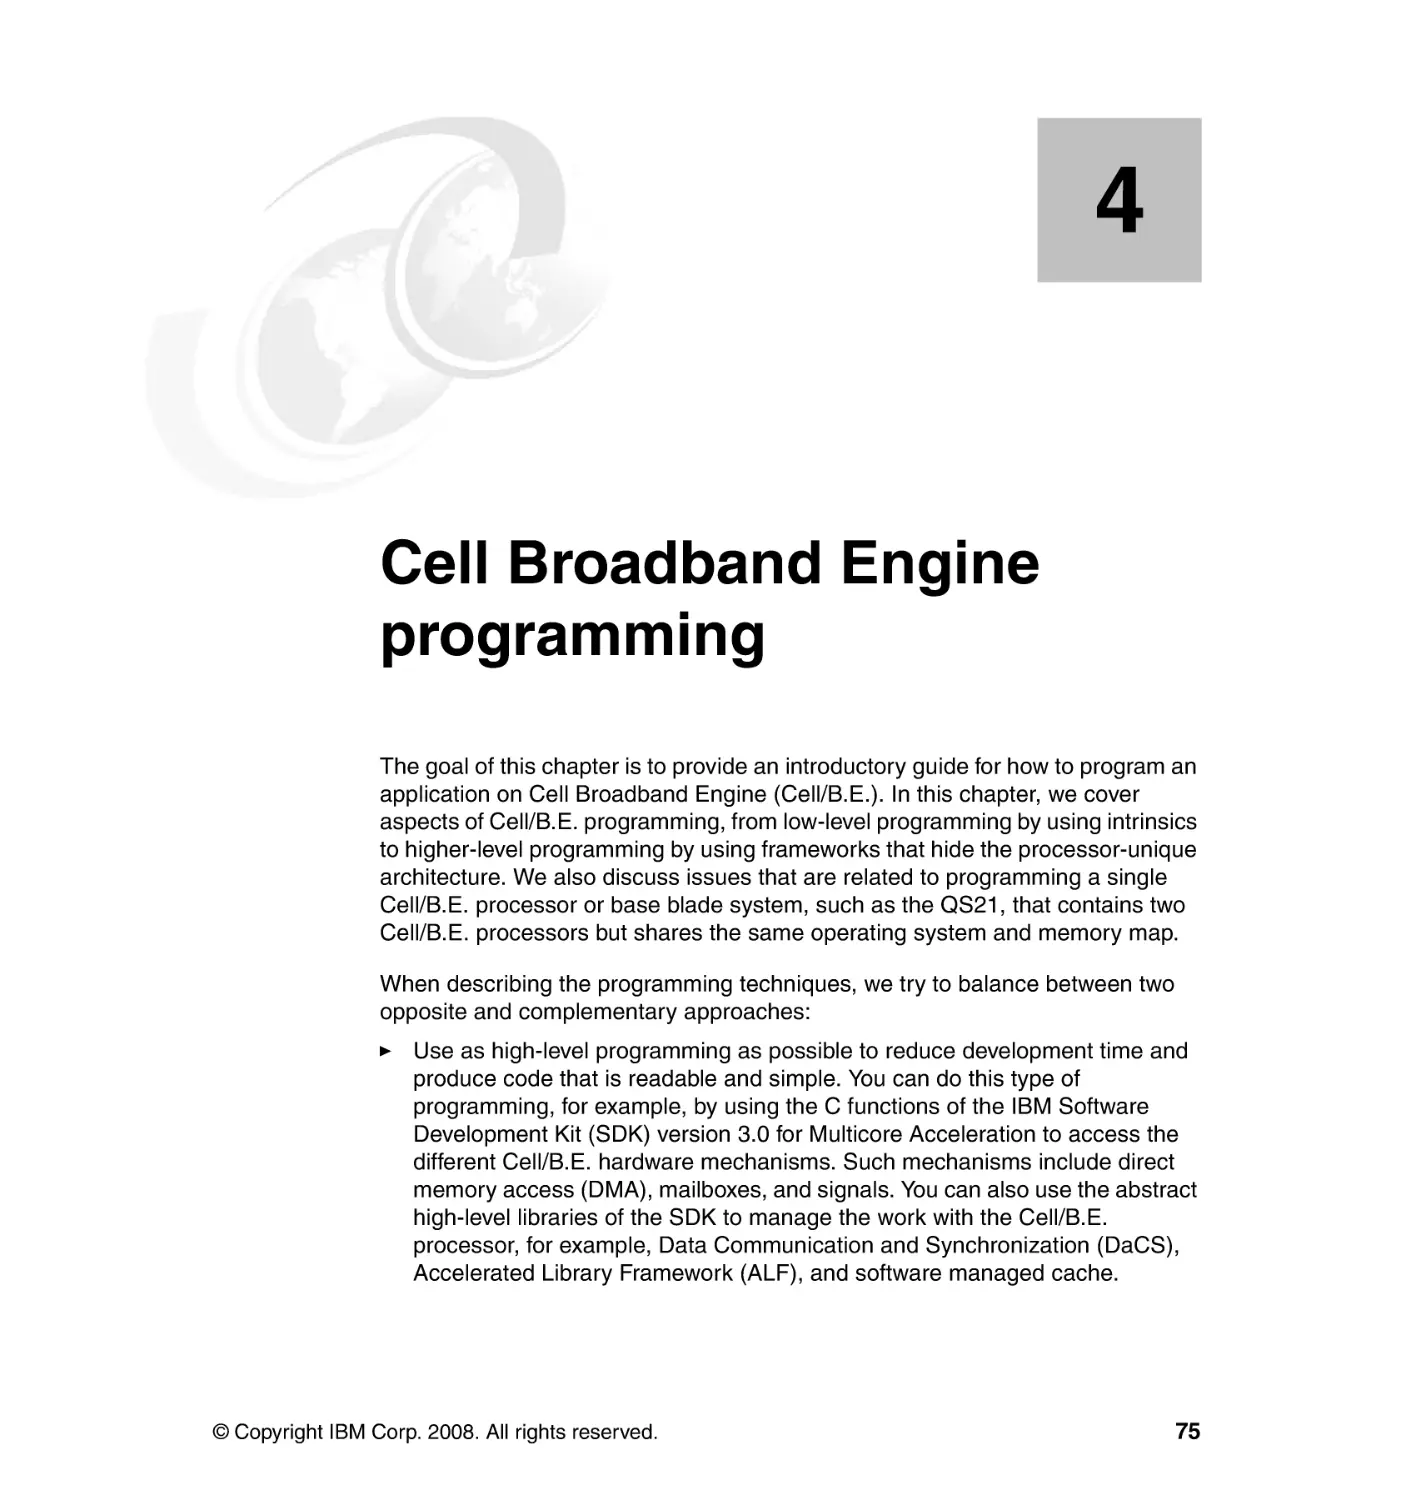 Chapter 4. Cell Broadband Engine programming